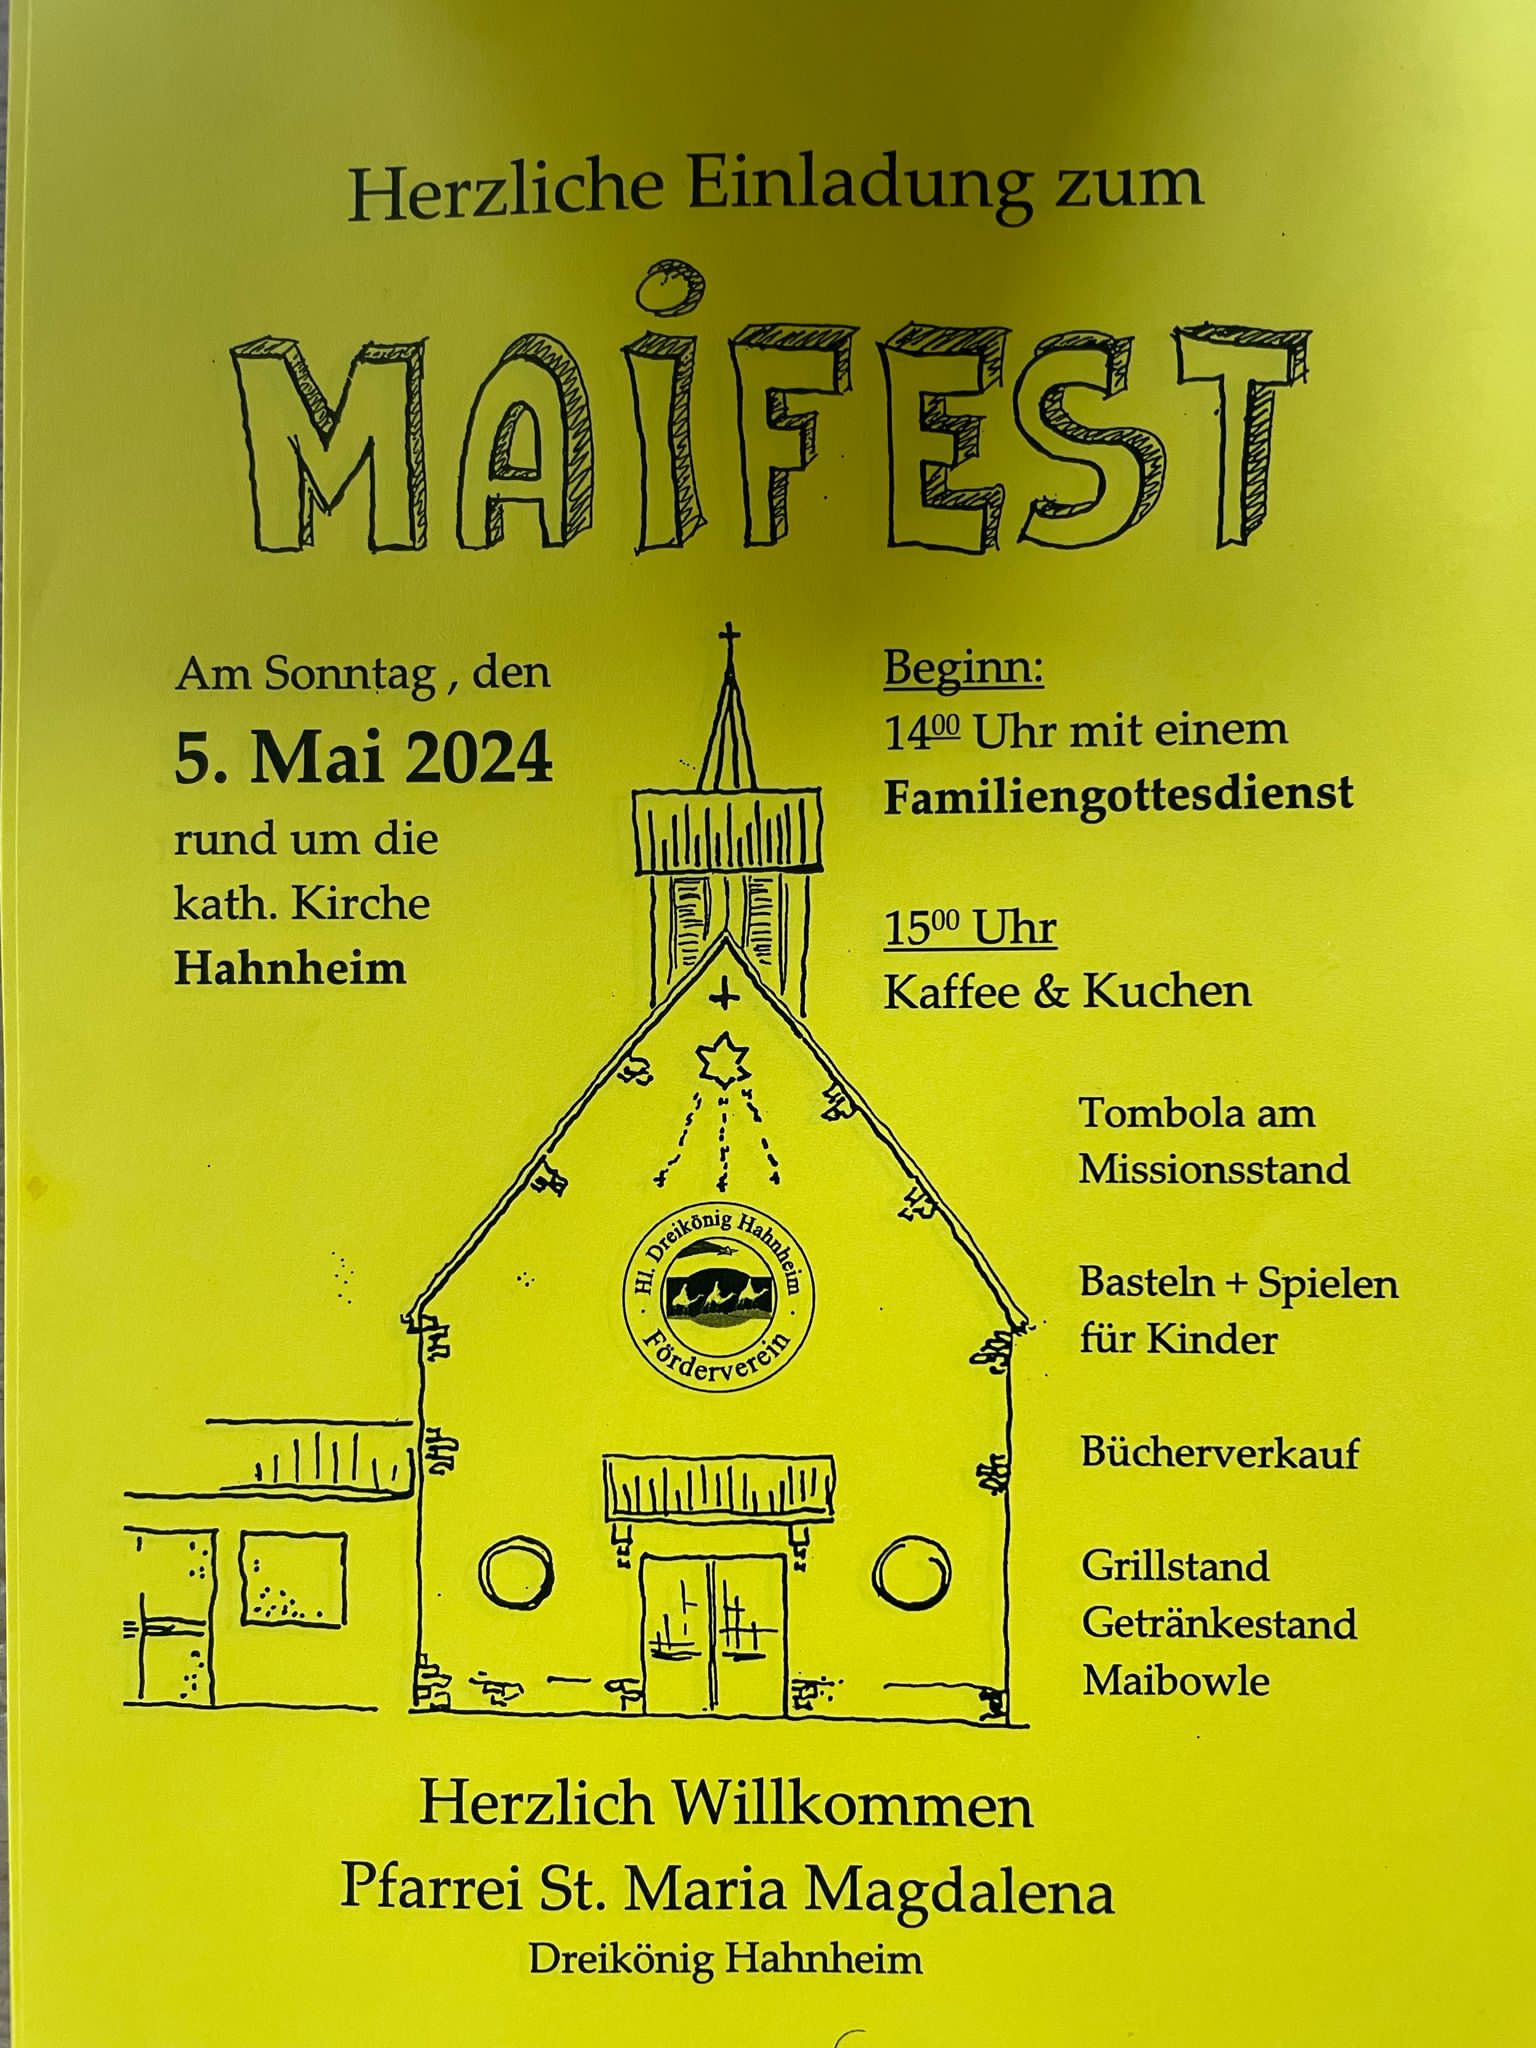 Maifest Hahnheim (c) Pfarrei St. Maria Magdalena